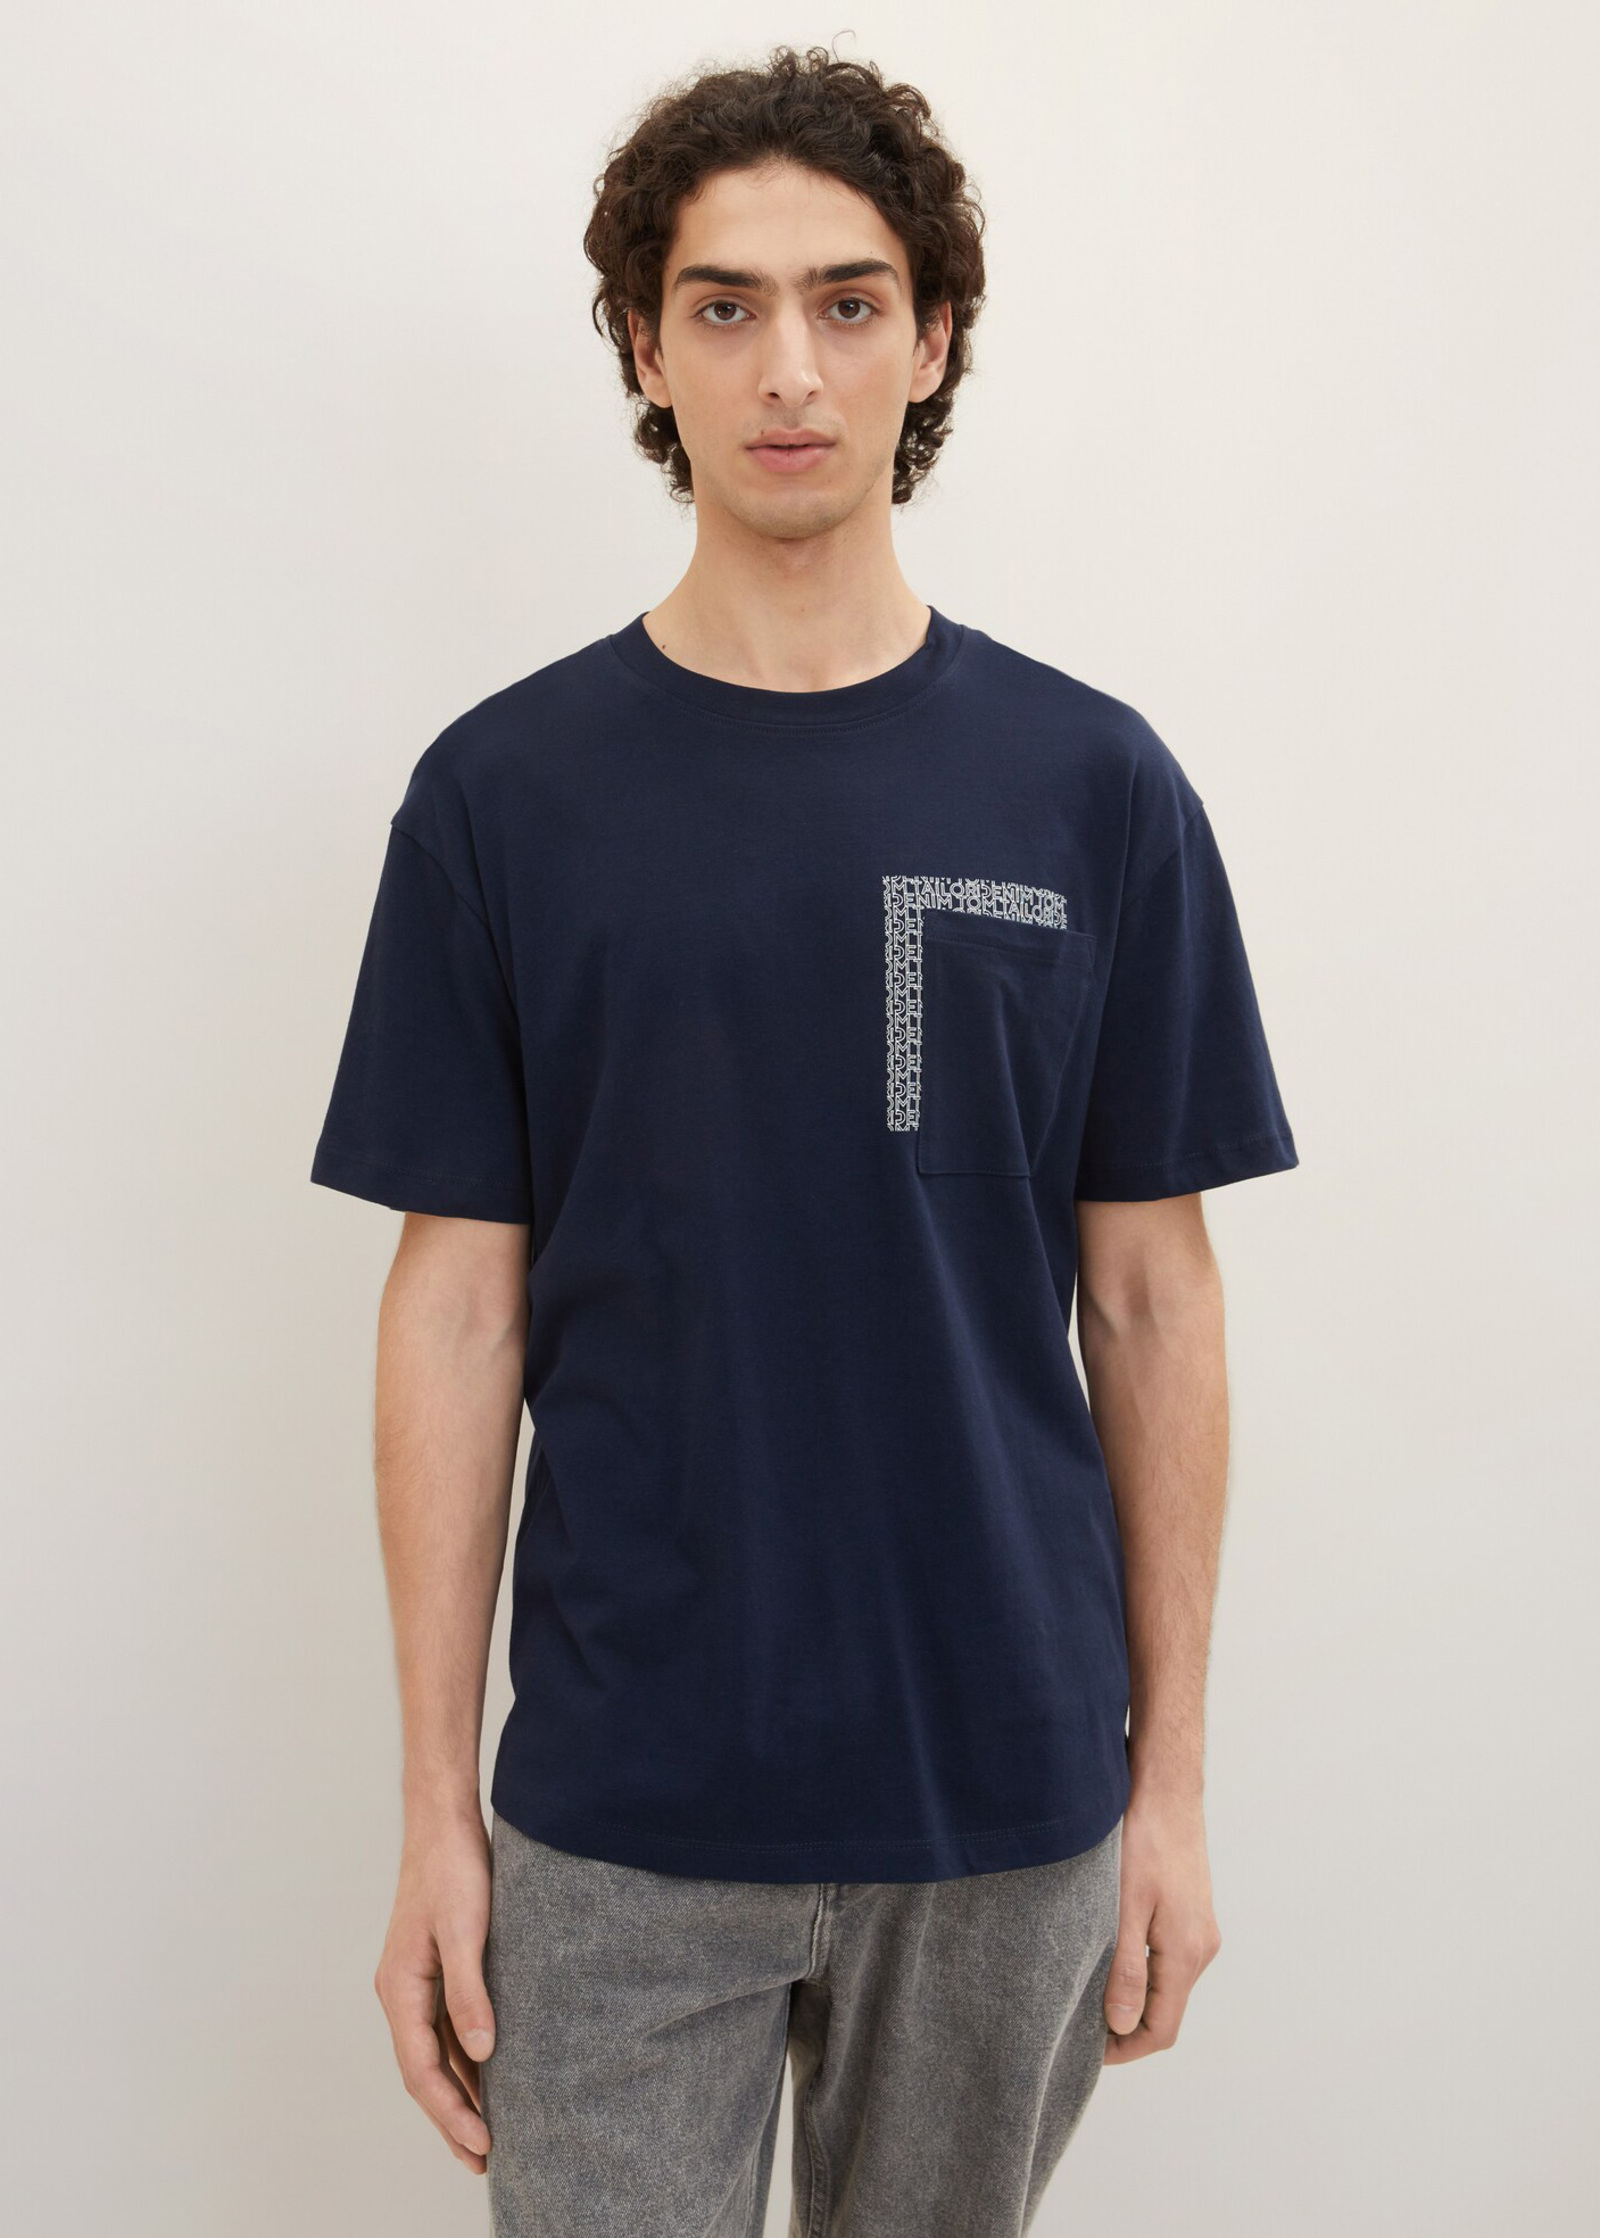 Tom Tailor® T-shirt Sign Size Captain Blue Sky XL 